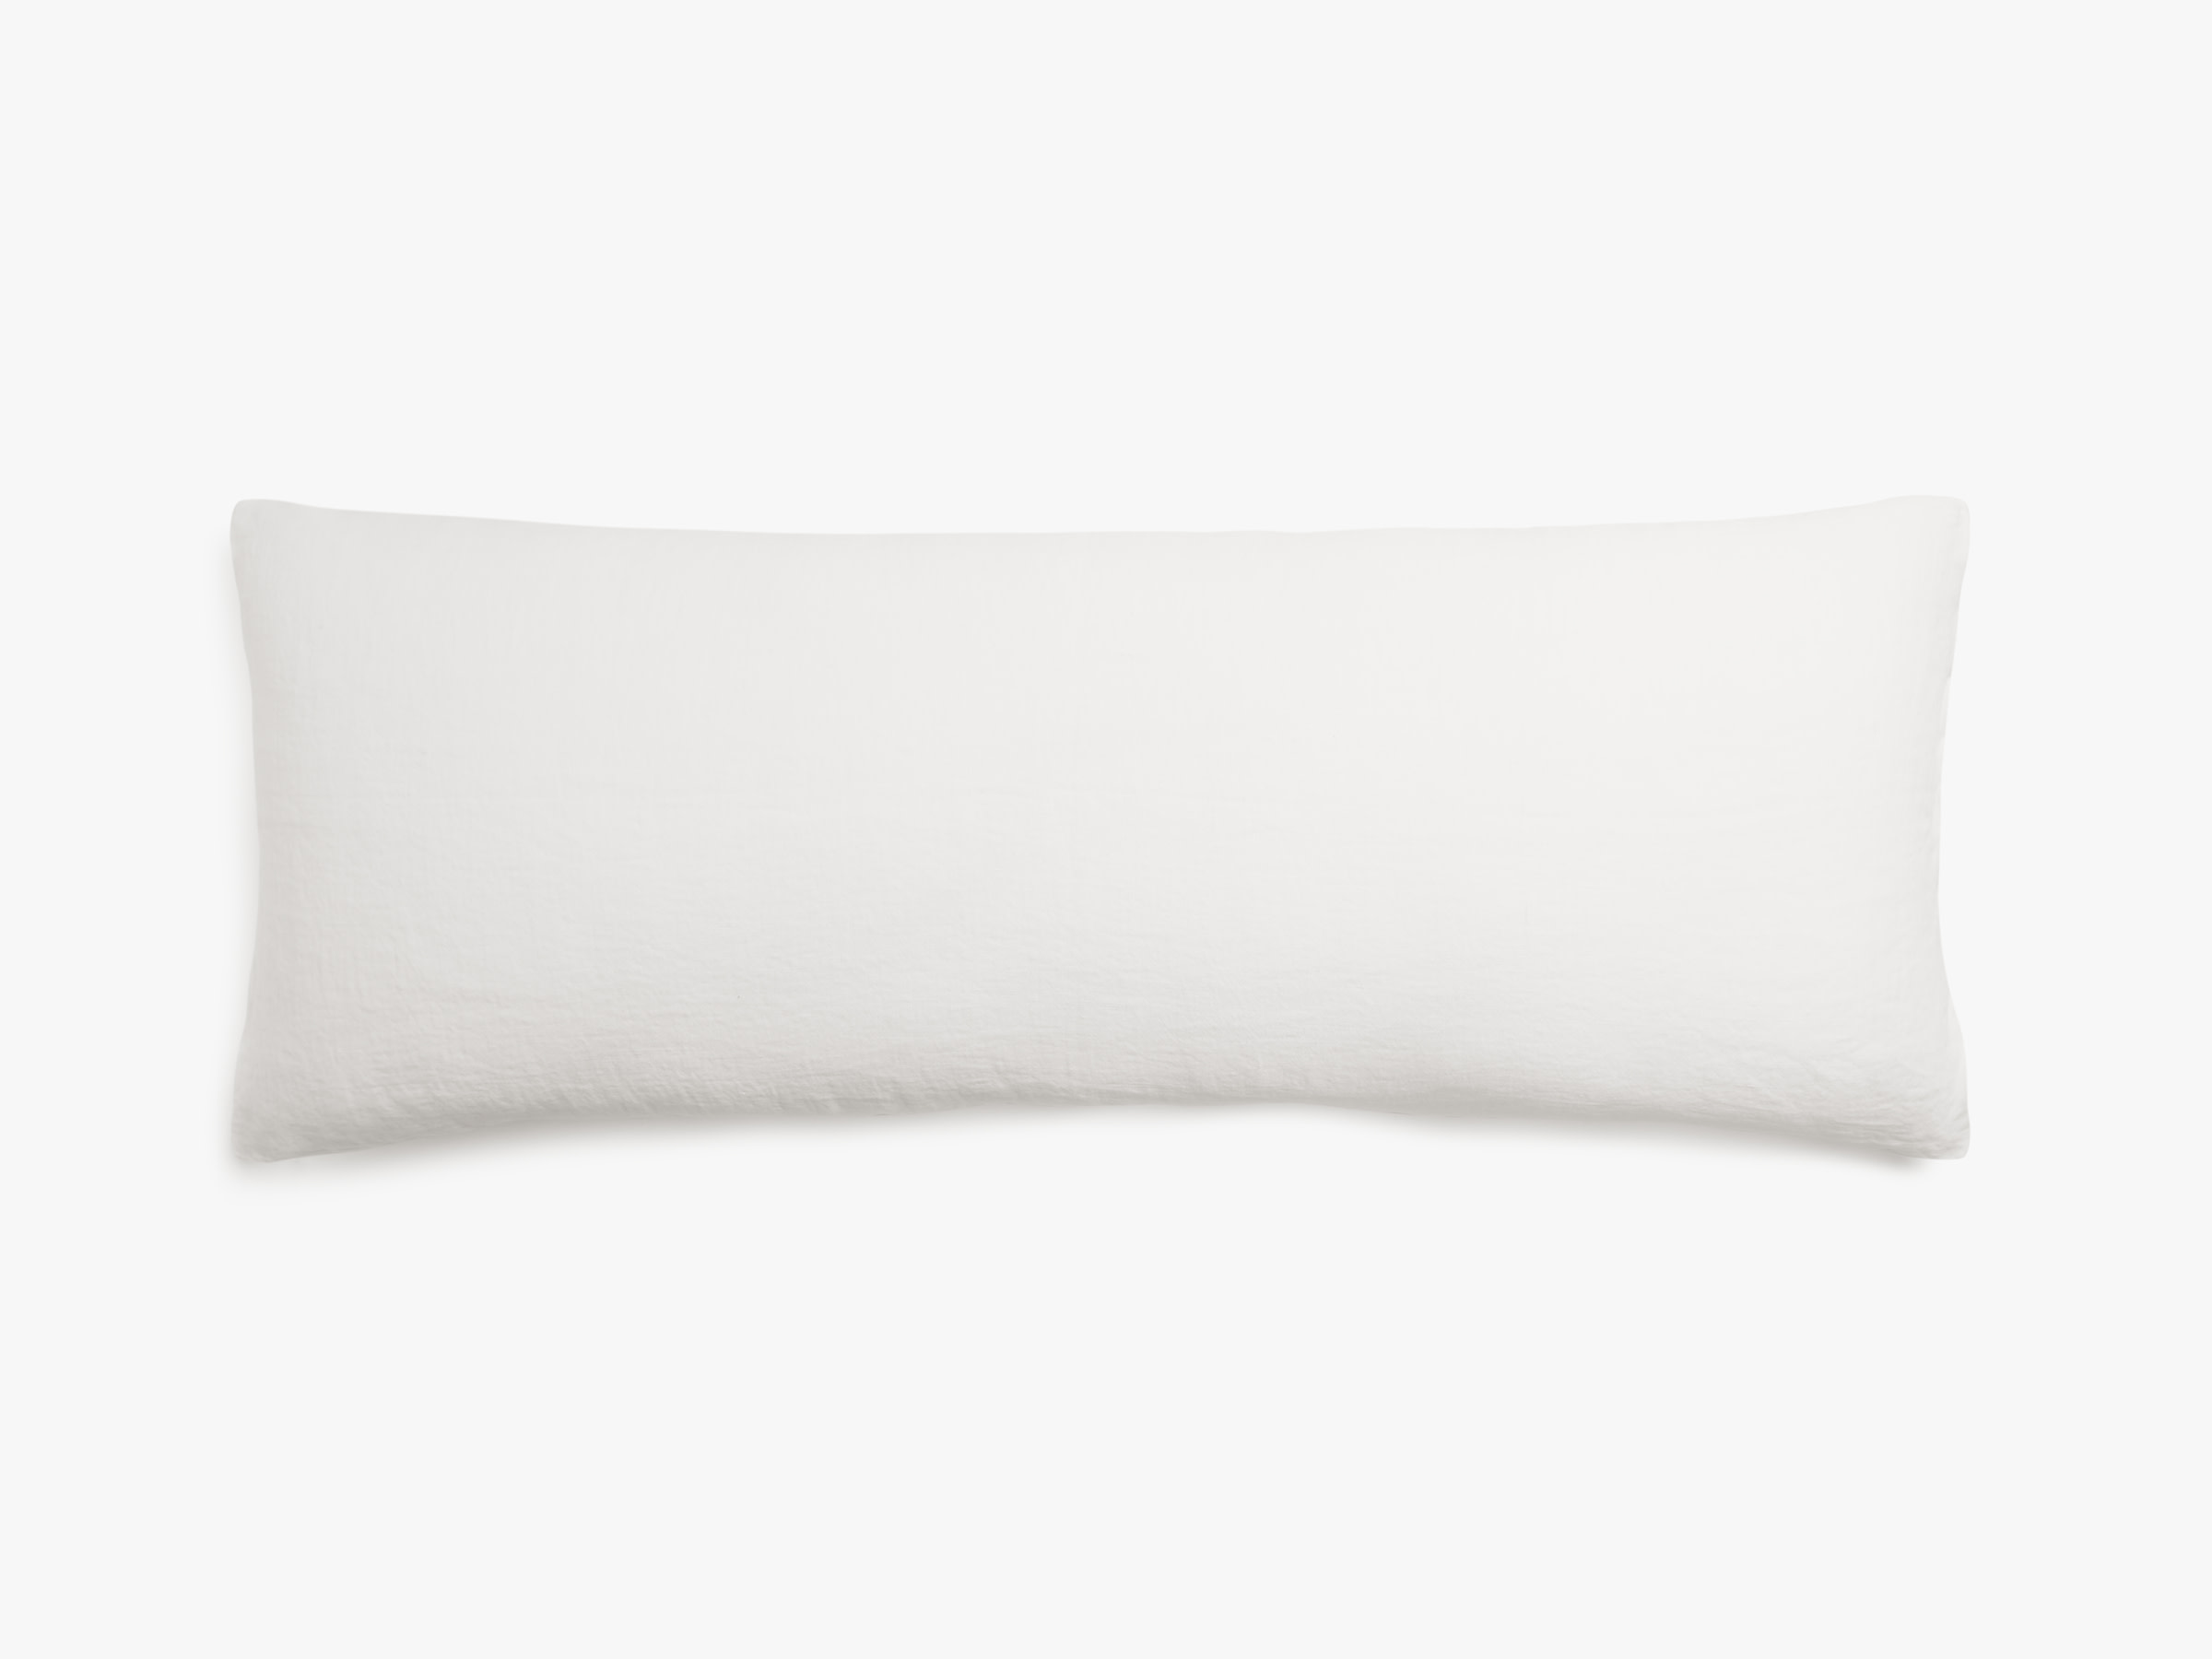 Antique White Vintage Linen Body Pillow Cover Product Image